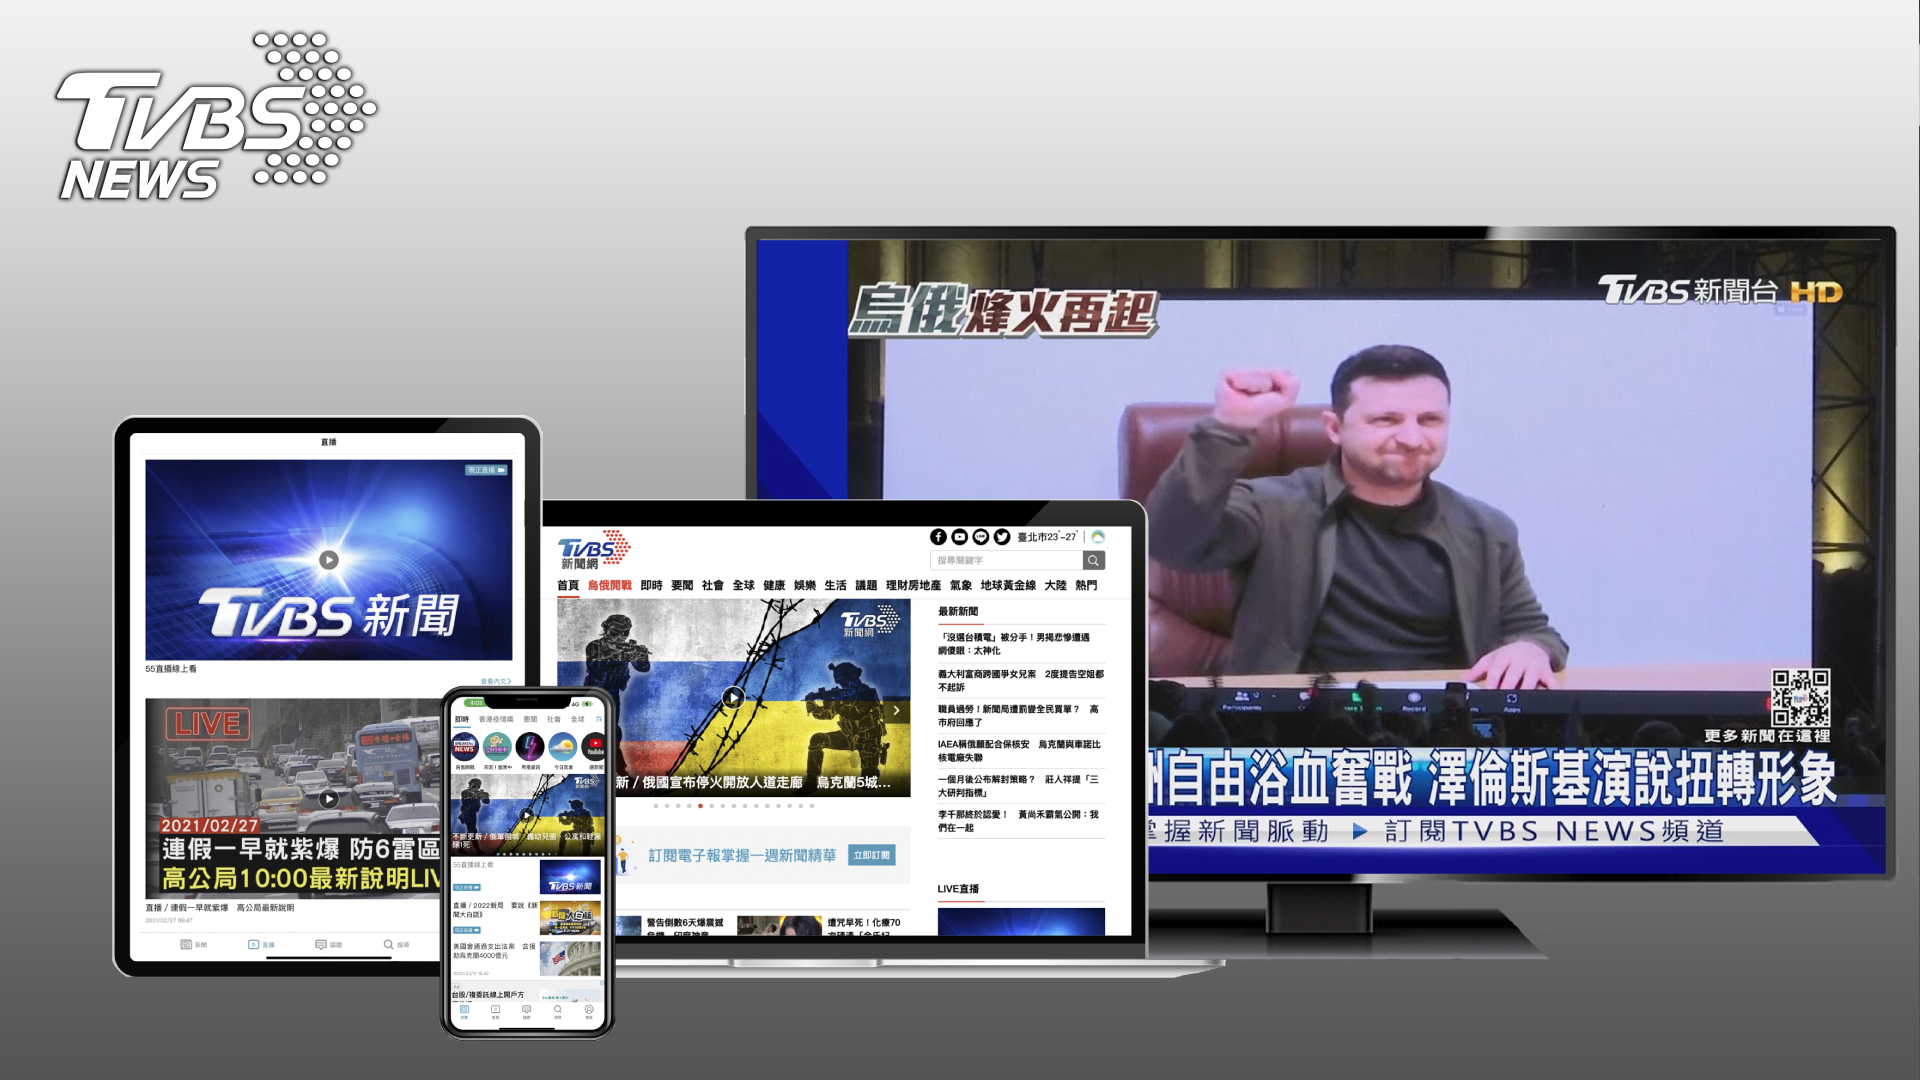 TVBS新聞橫跨電視、網路、手機等多元平台，提供不同閱聽者最適合的閱覽新聞方式 (圖/TVBS) TVBS囊括電視網路新聞雙料冠軍！ 網路流量權威ComScore公布 《TVBS新聞網》奪全台第一